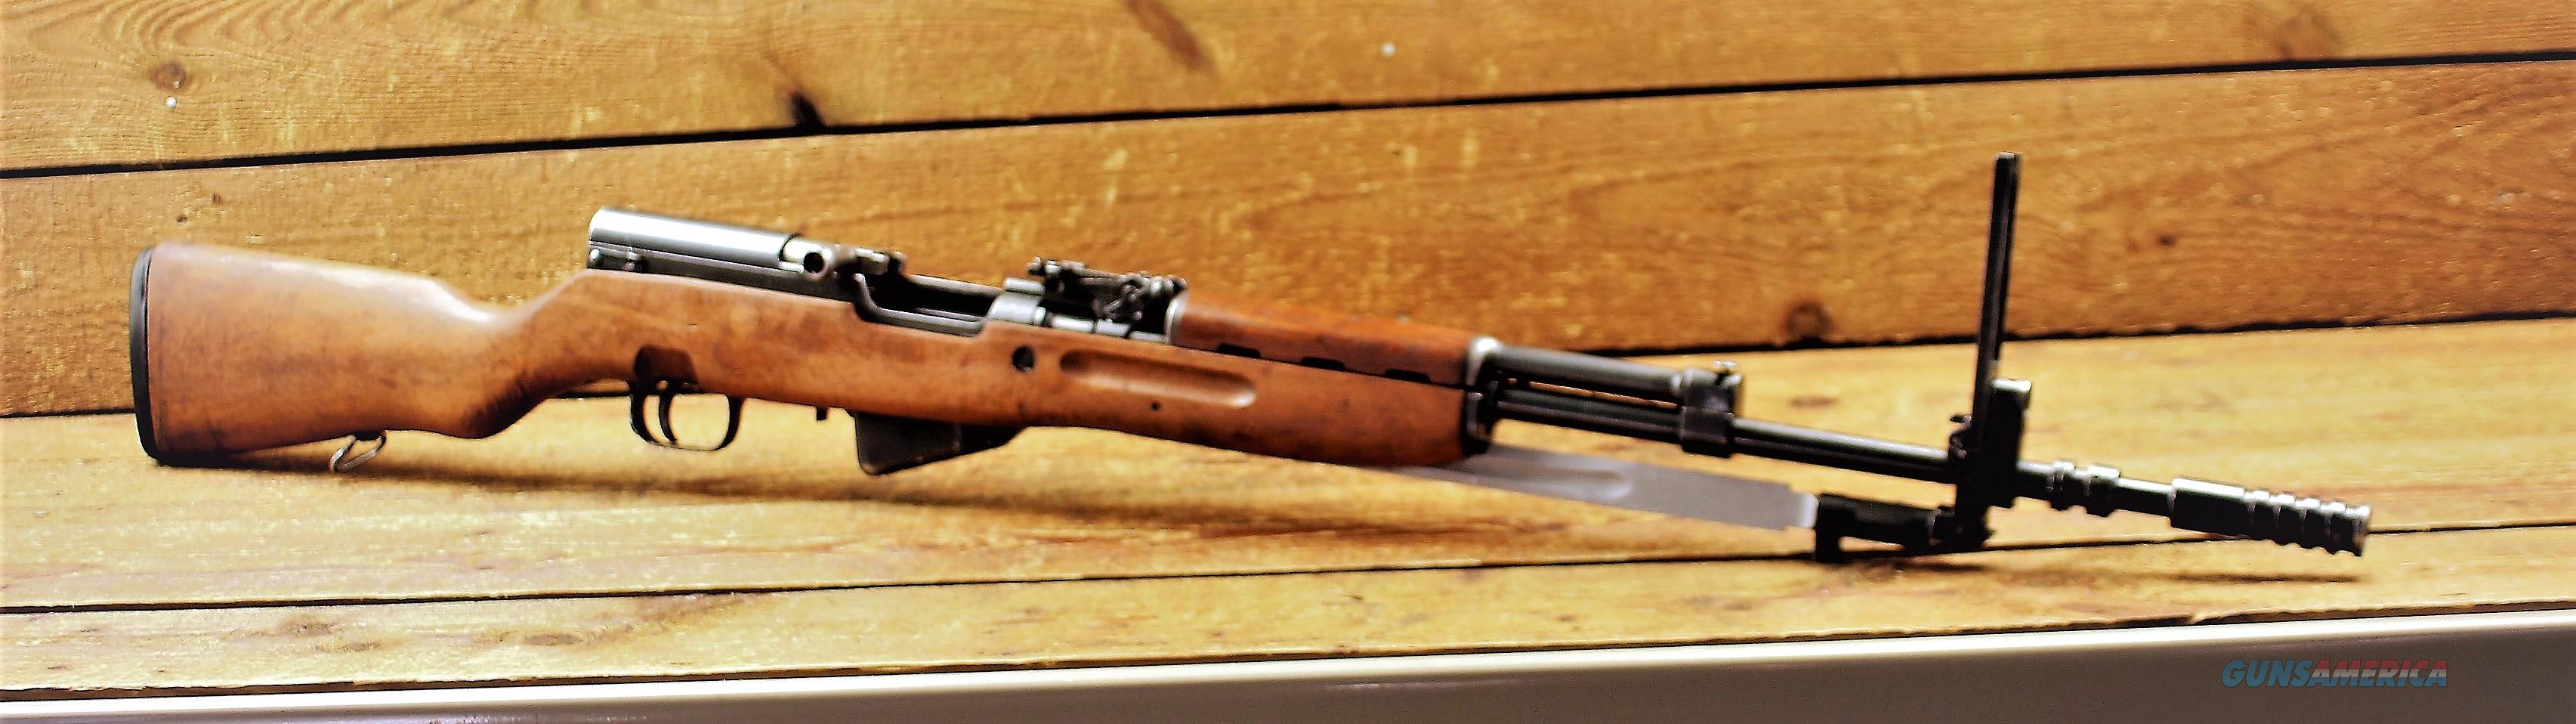 husqvarna 270 rifle serial numbers